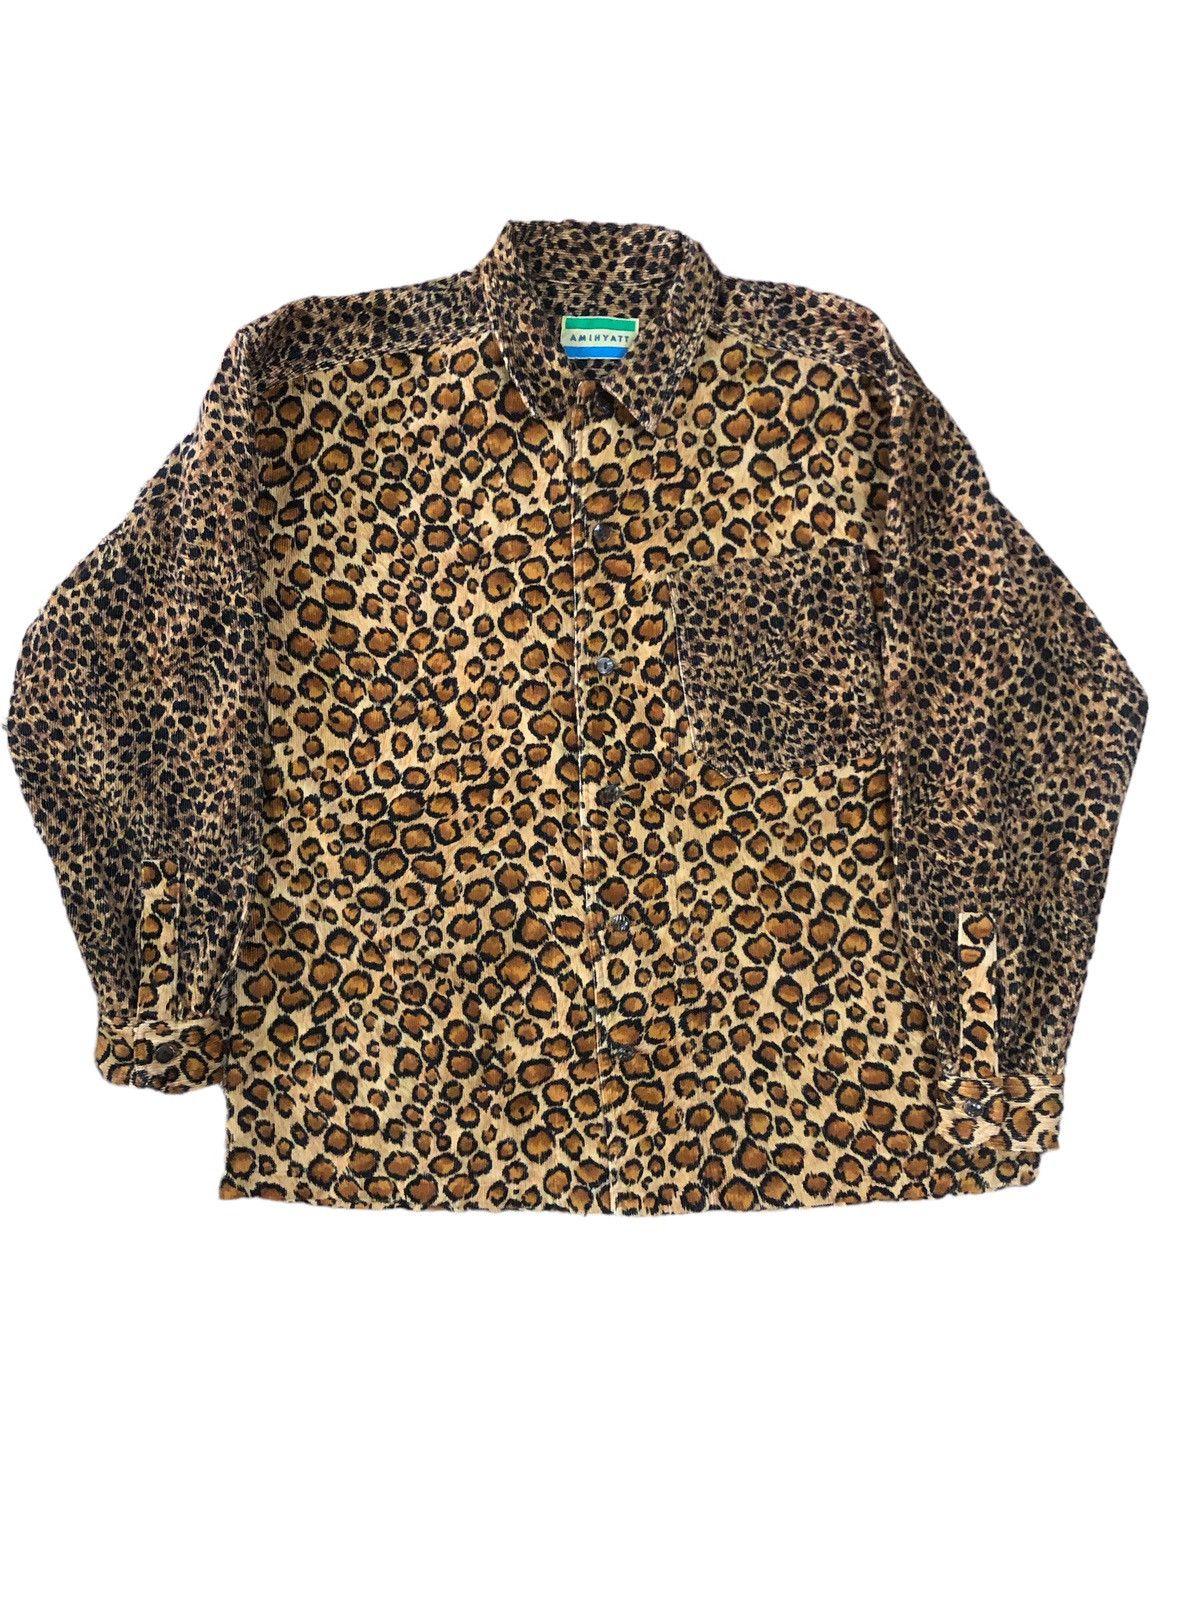 Japanese Brand - Amihyatt Leopard Print button ups jacket - 1